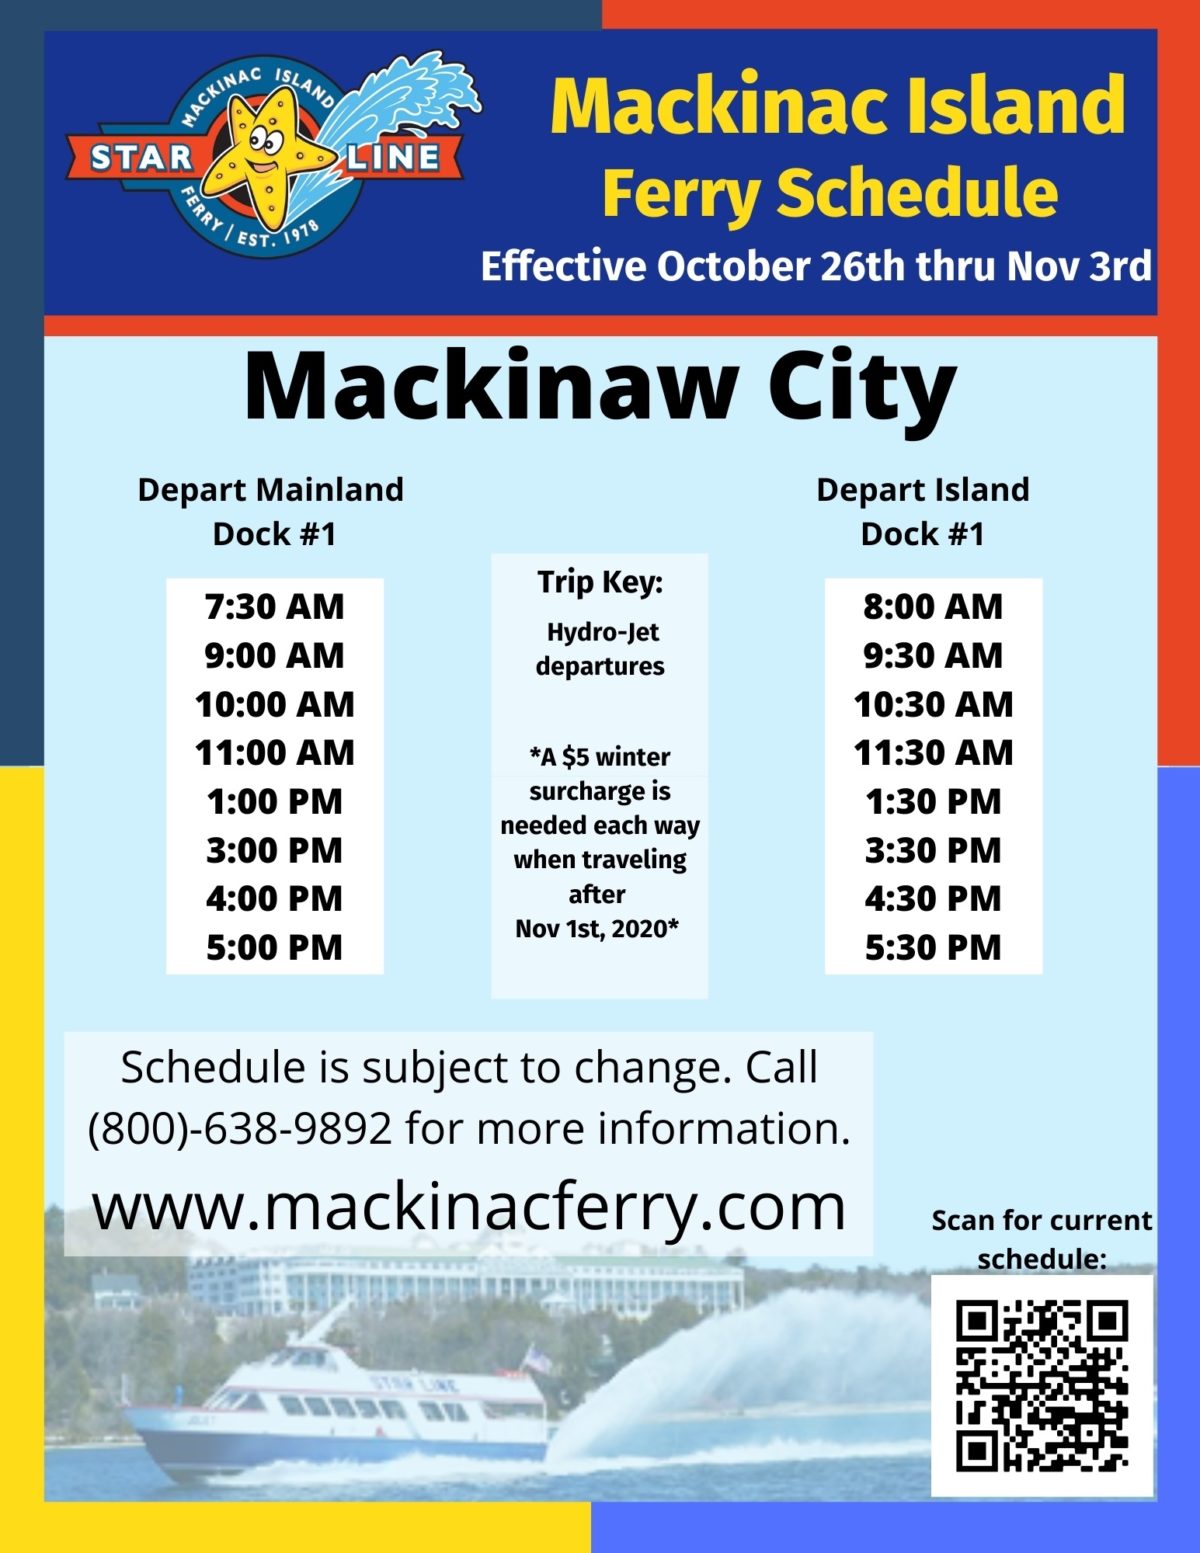 Schedule Change starting October 26th, 2020 Star Line Mackinac Island